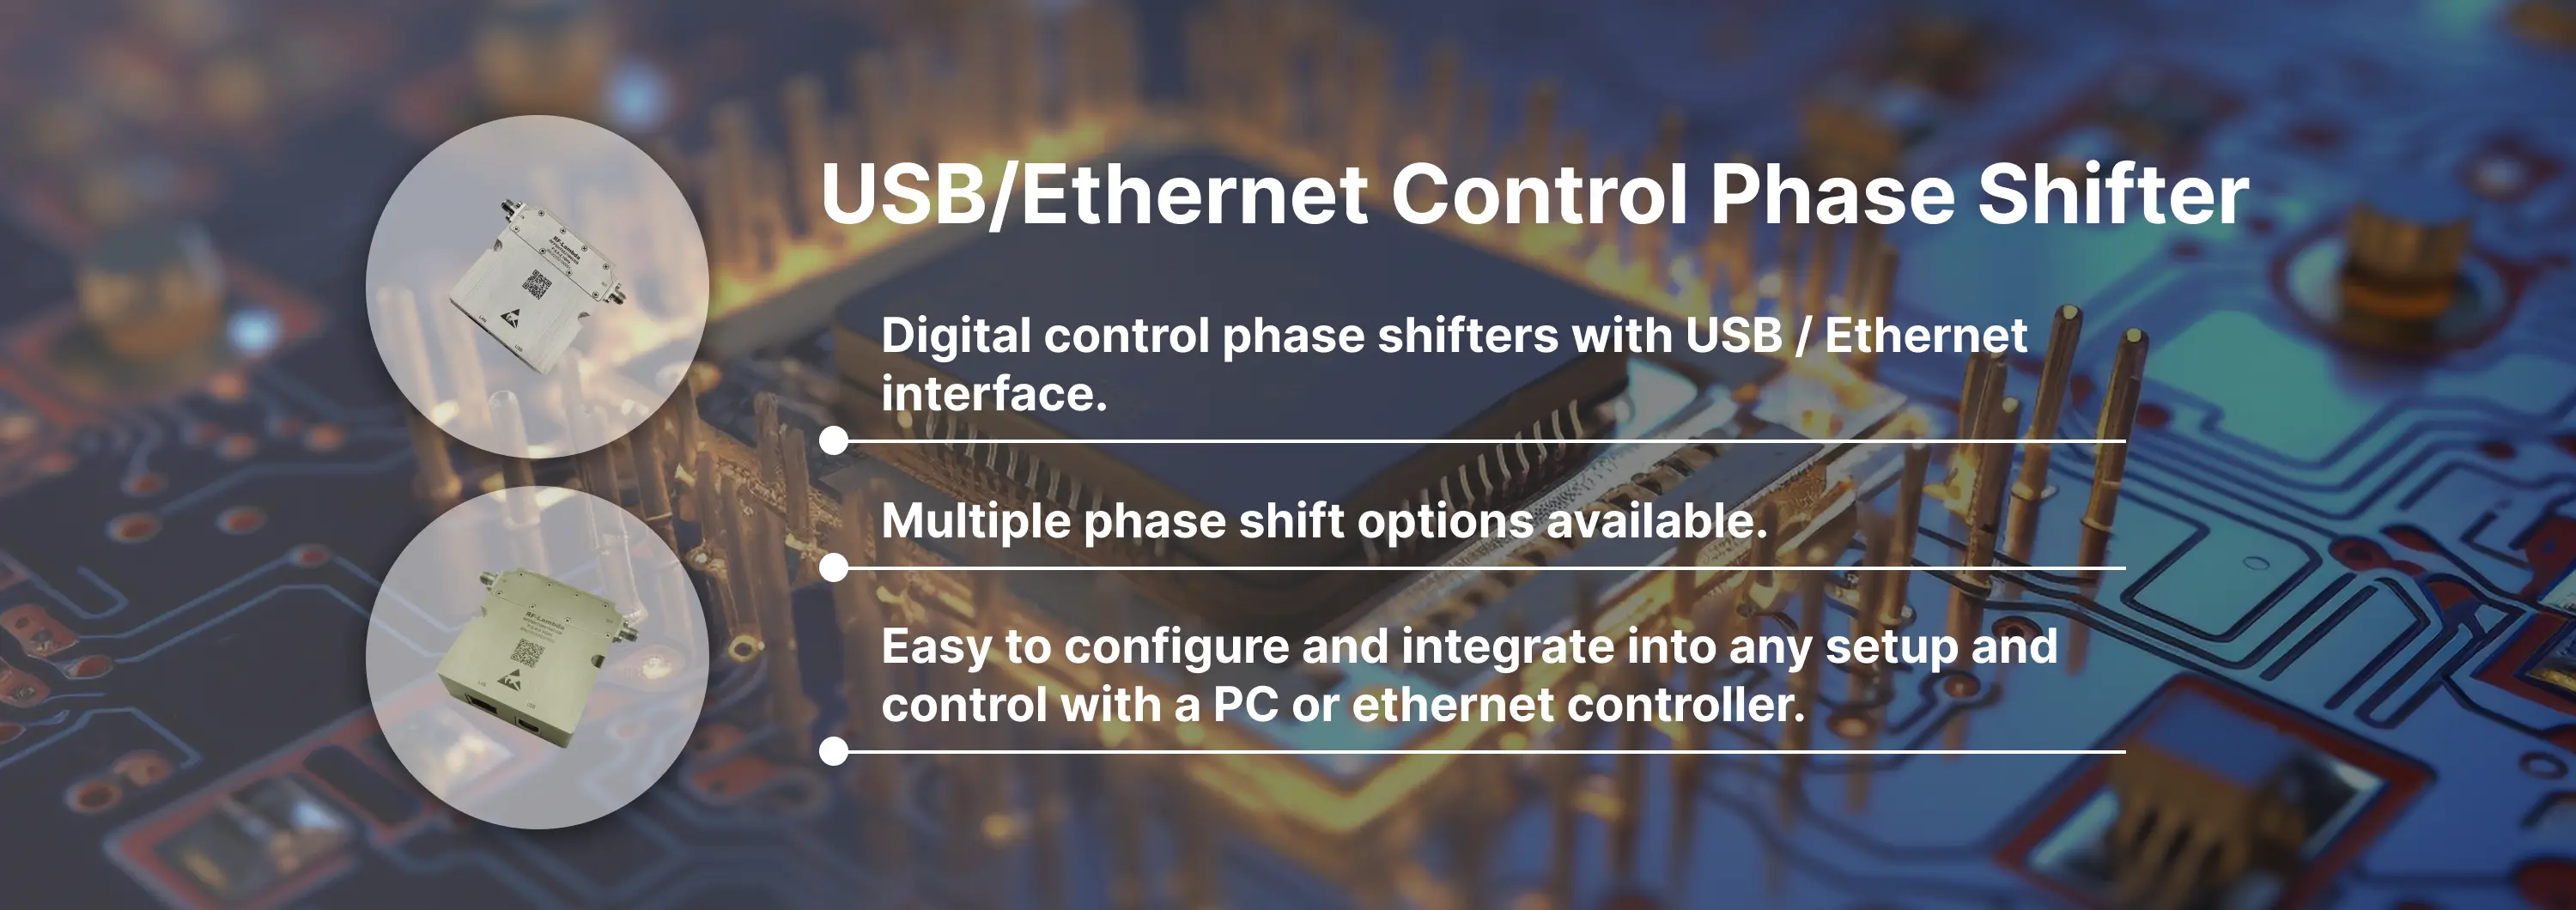 USB/Ethernet Control Phase Shifter Banner